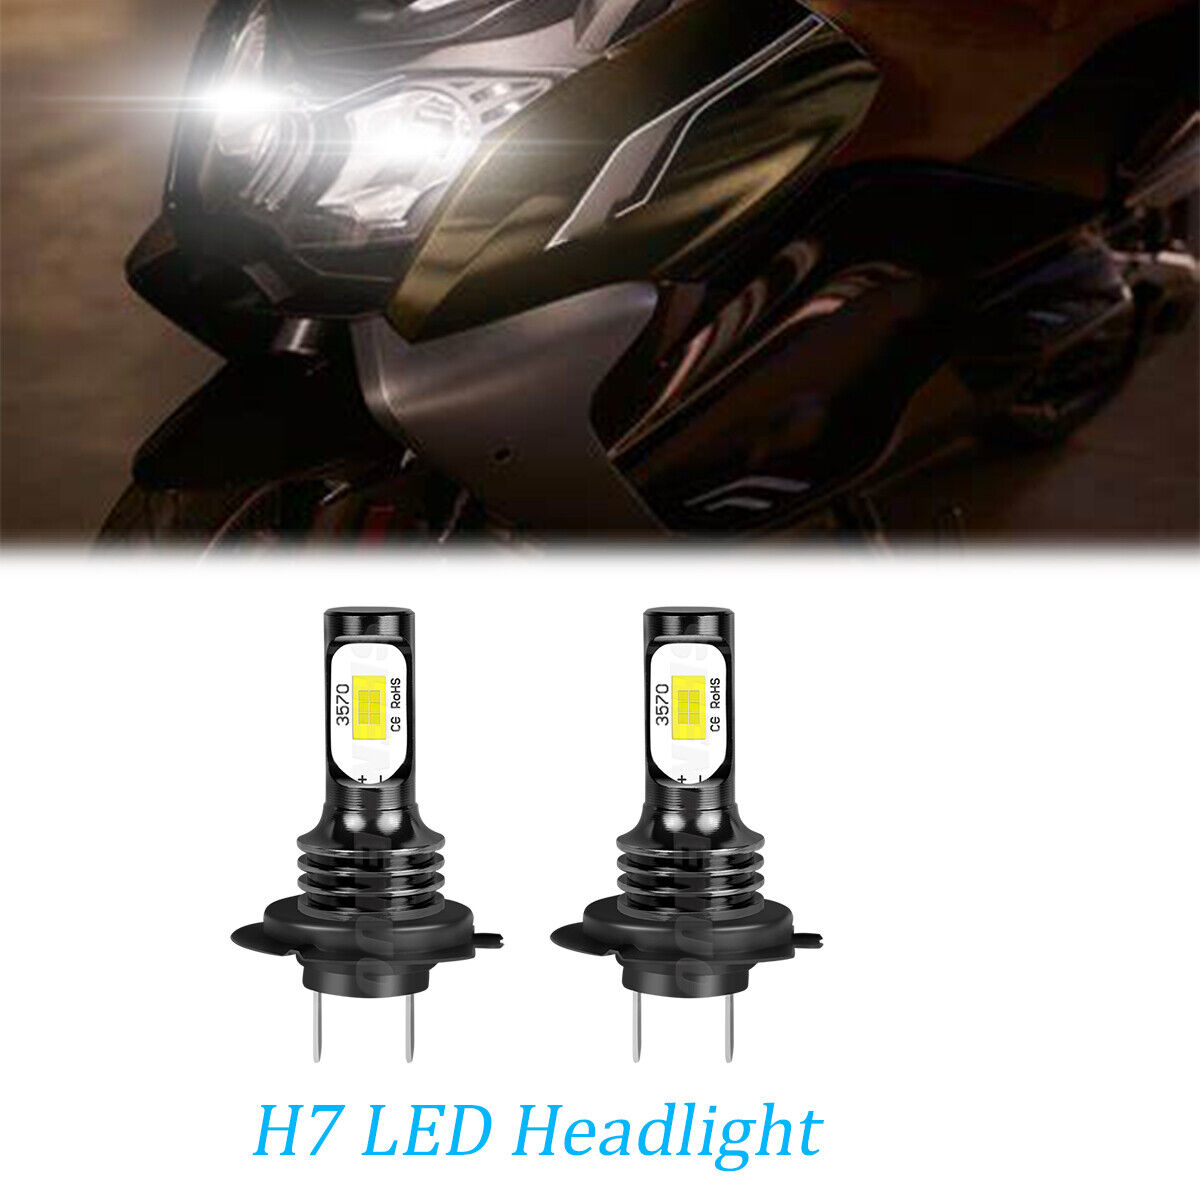 2pc H7 LED Headlight Bulbs Conversion Kit 6000K White For BMW C650GT 2013 - 2020